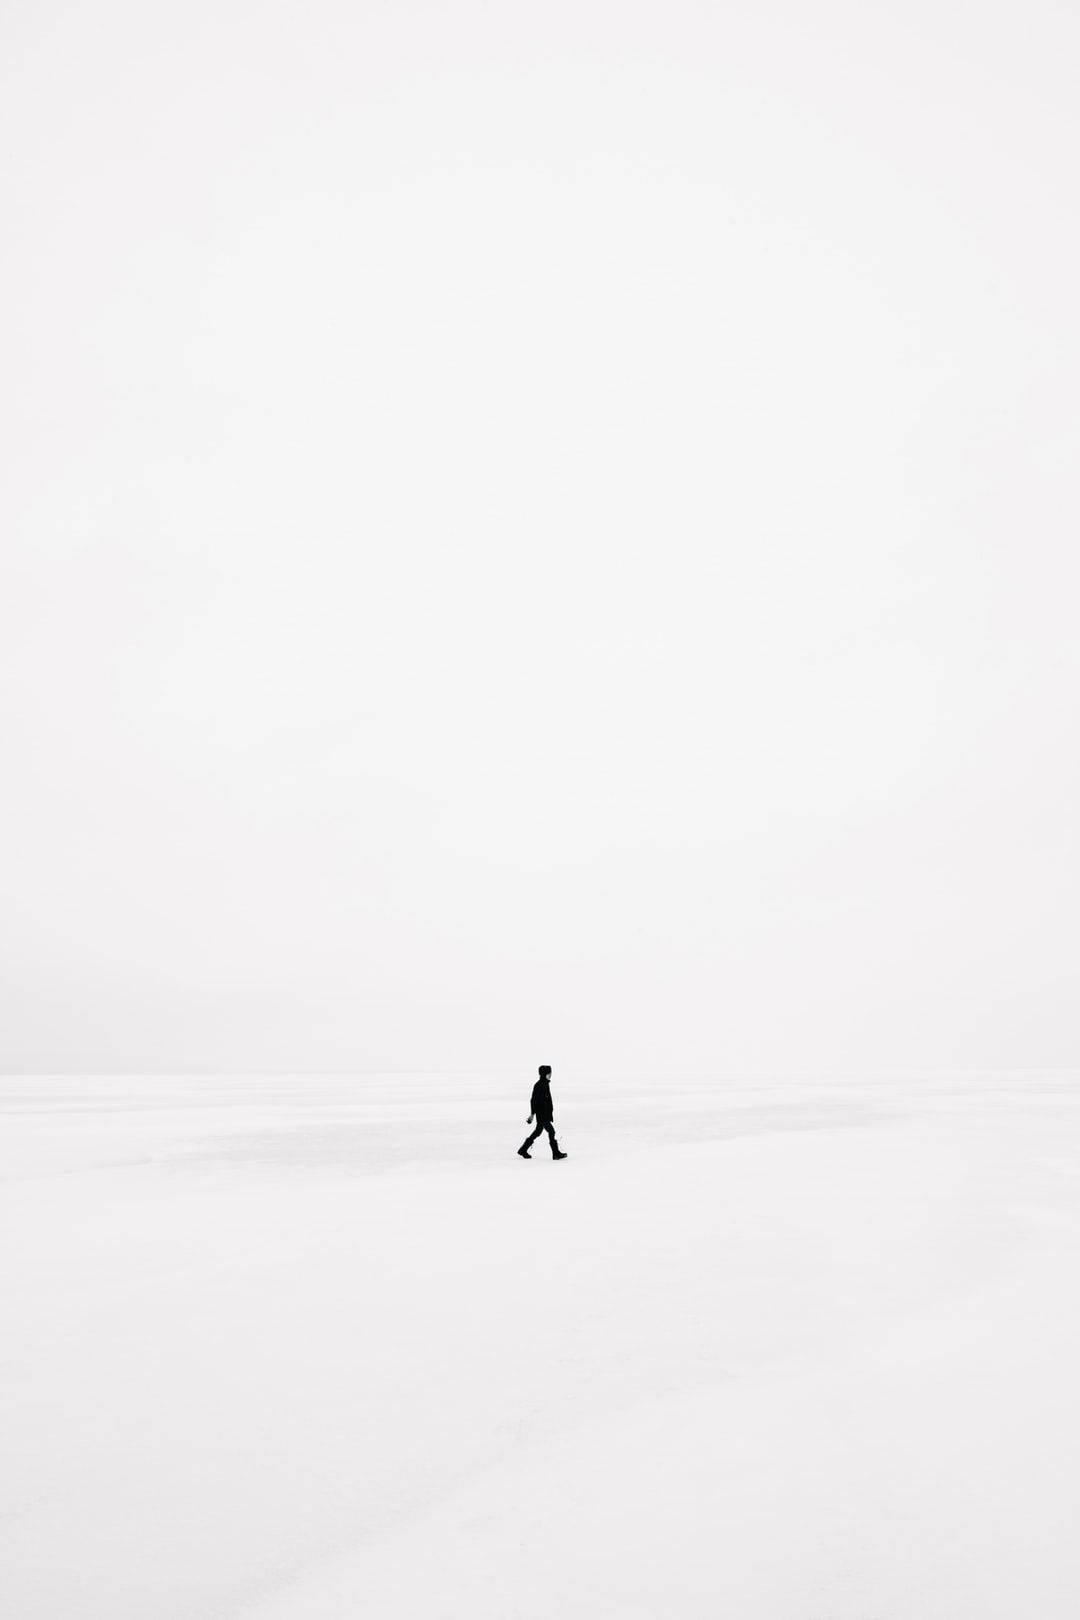 A Simplicity In Motion - Blank White Walking Man Wallpaper